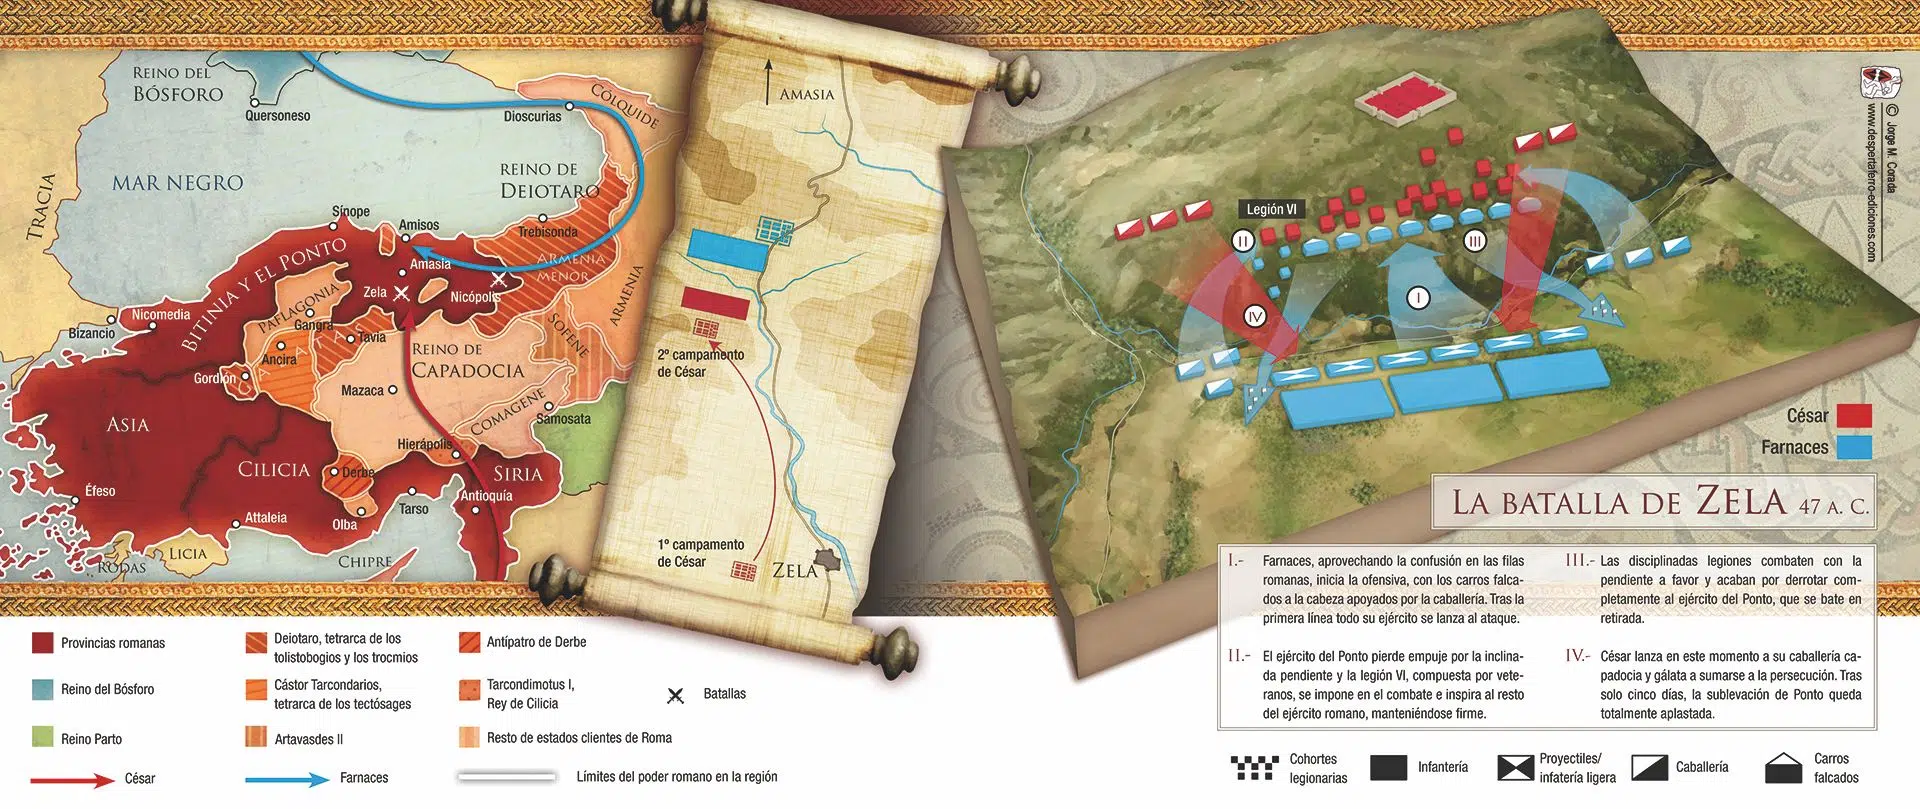 Mapa batalla de Zela Julio César